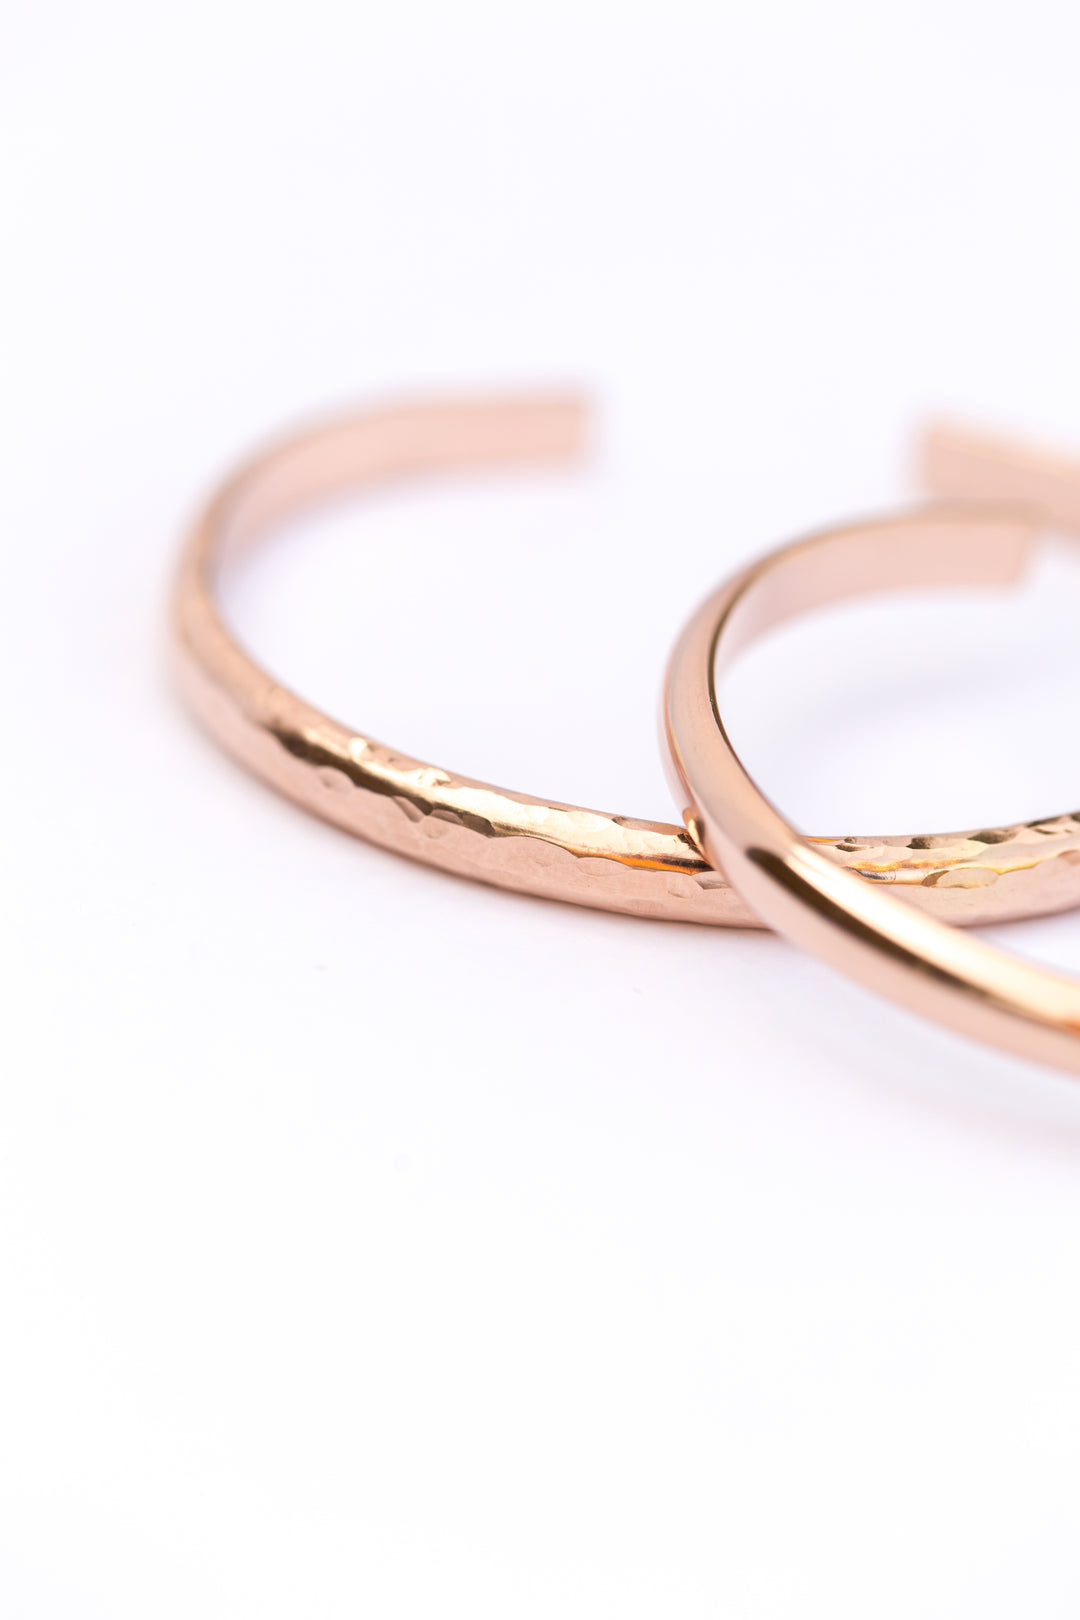 Wanderlust Hammered Rose Gold Bangle Cuff Bracelet – Anna Shae Jewelry